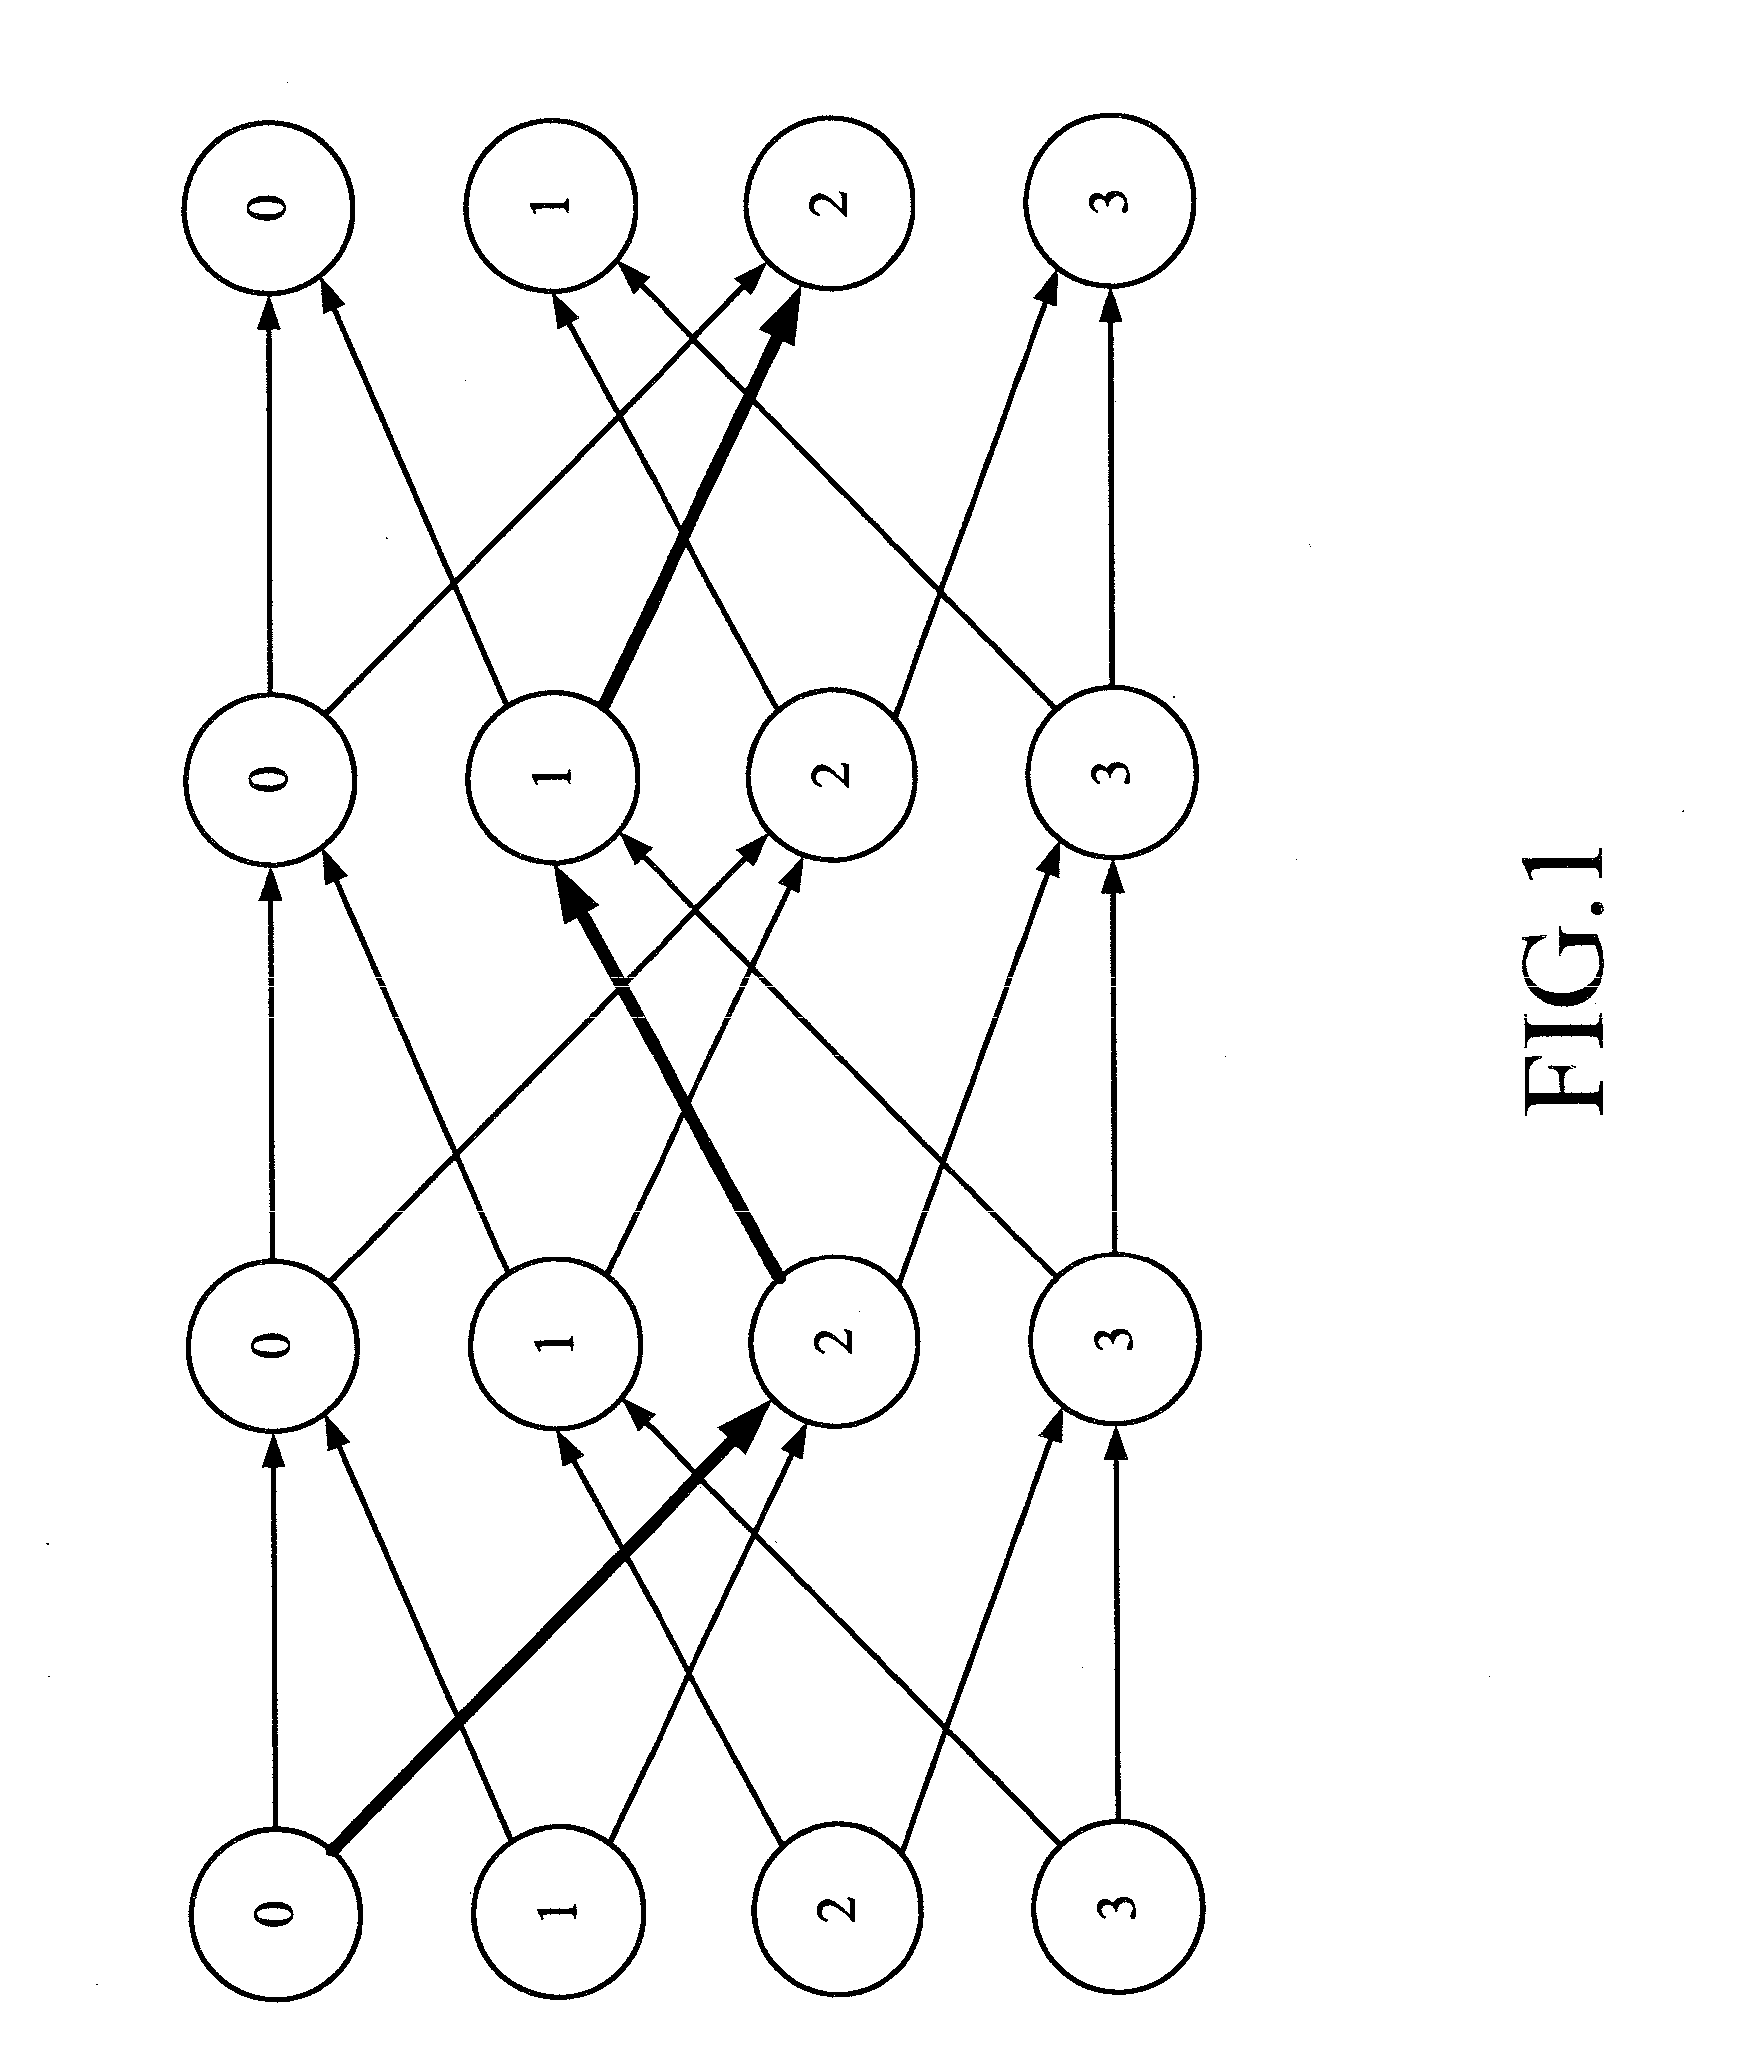 Veterbi decoding method for convolutionally encoded signal